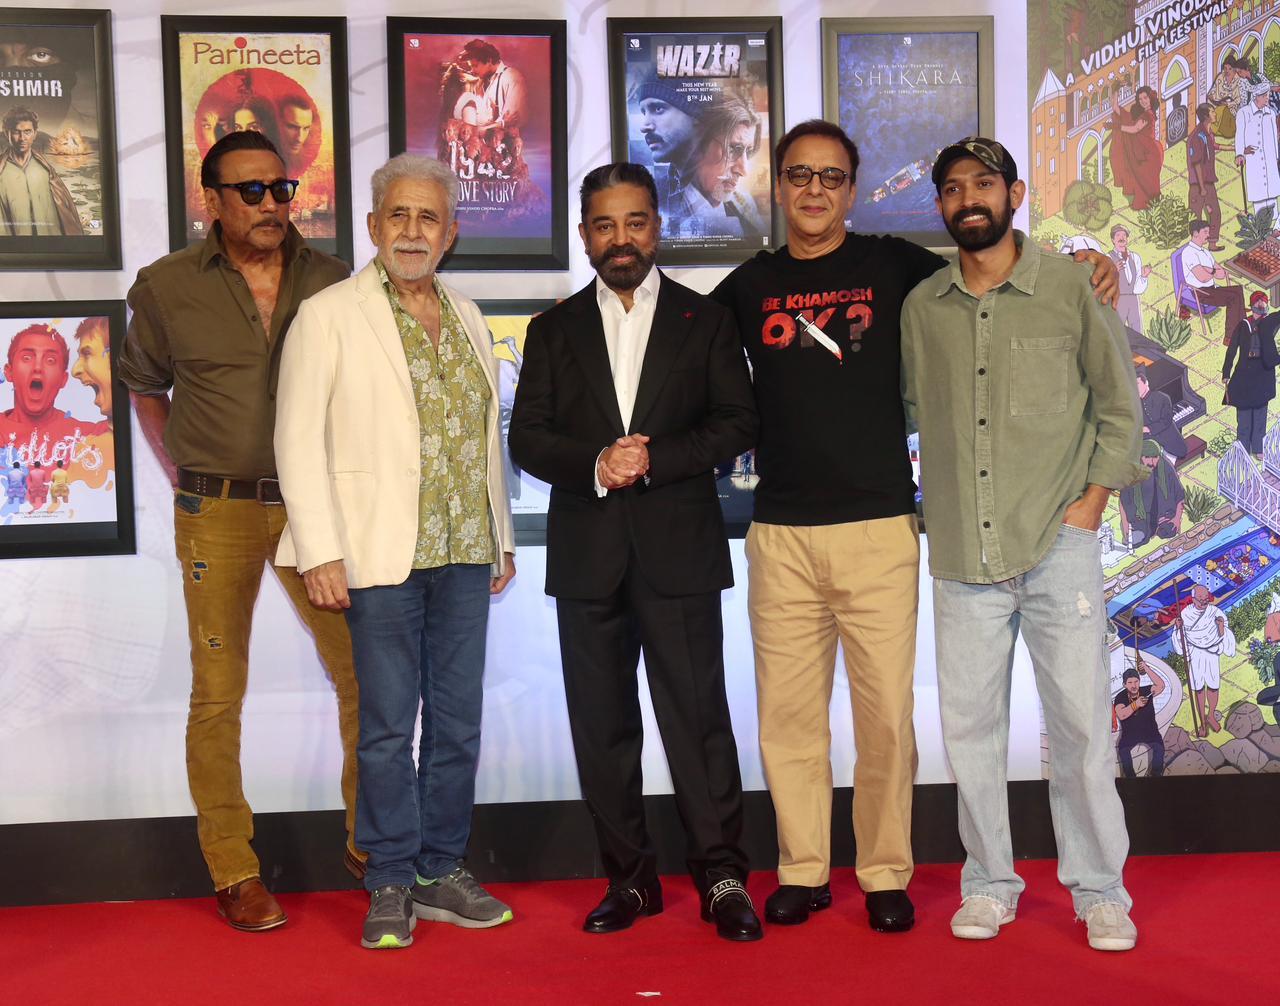 Jackie Shroff, Naseeruddin Shah, Kamal Haasan, Vidhu Vinod Chopra and Vikrant Massey pose together 